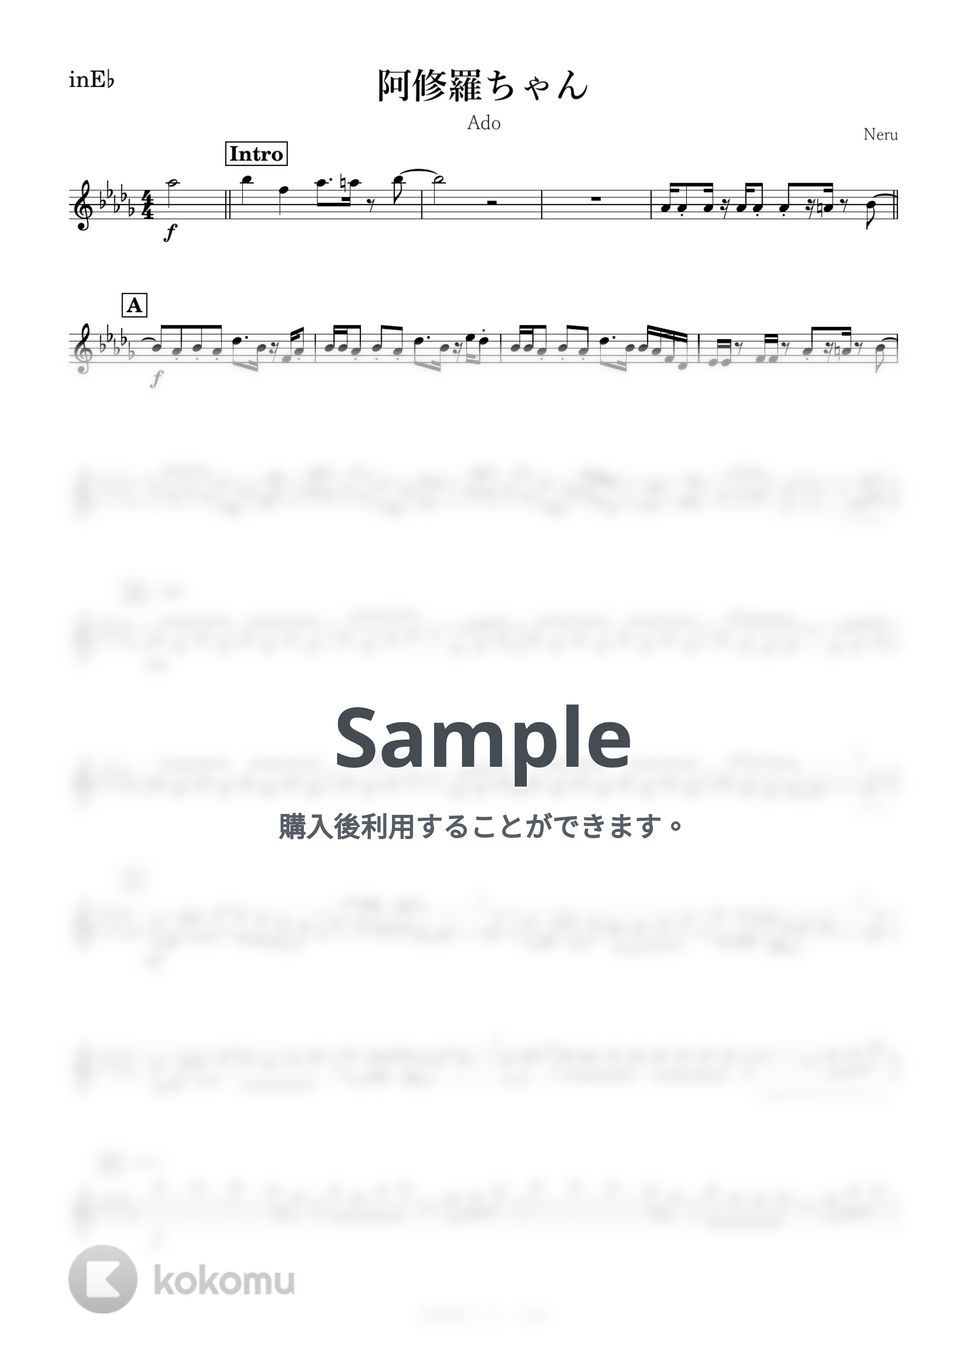 Ado - 阿修羅ちゃん (E♭) by kanamusic